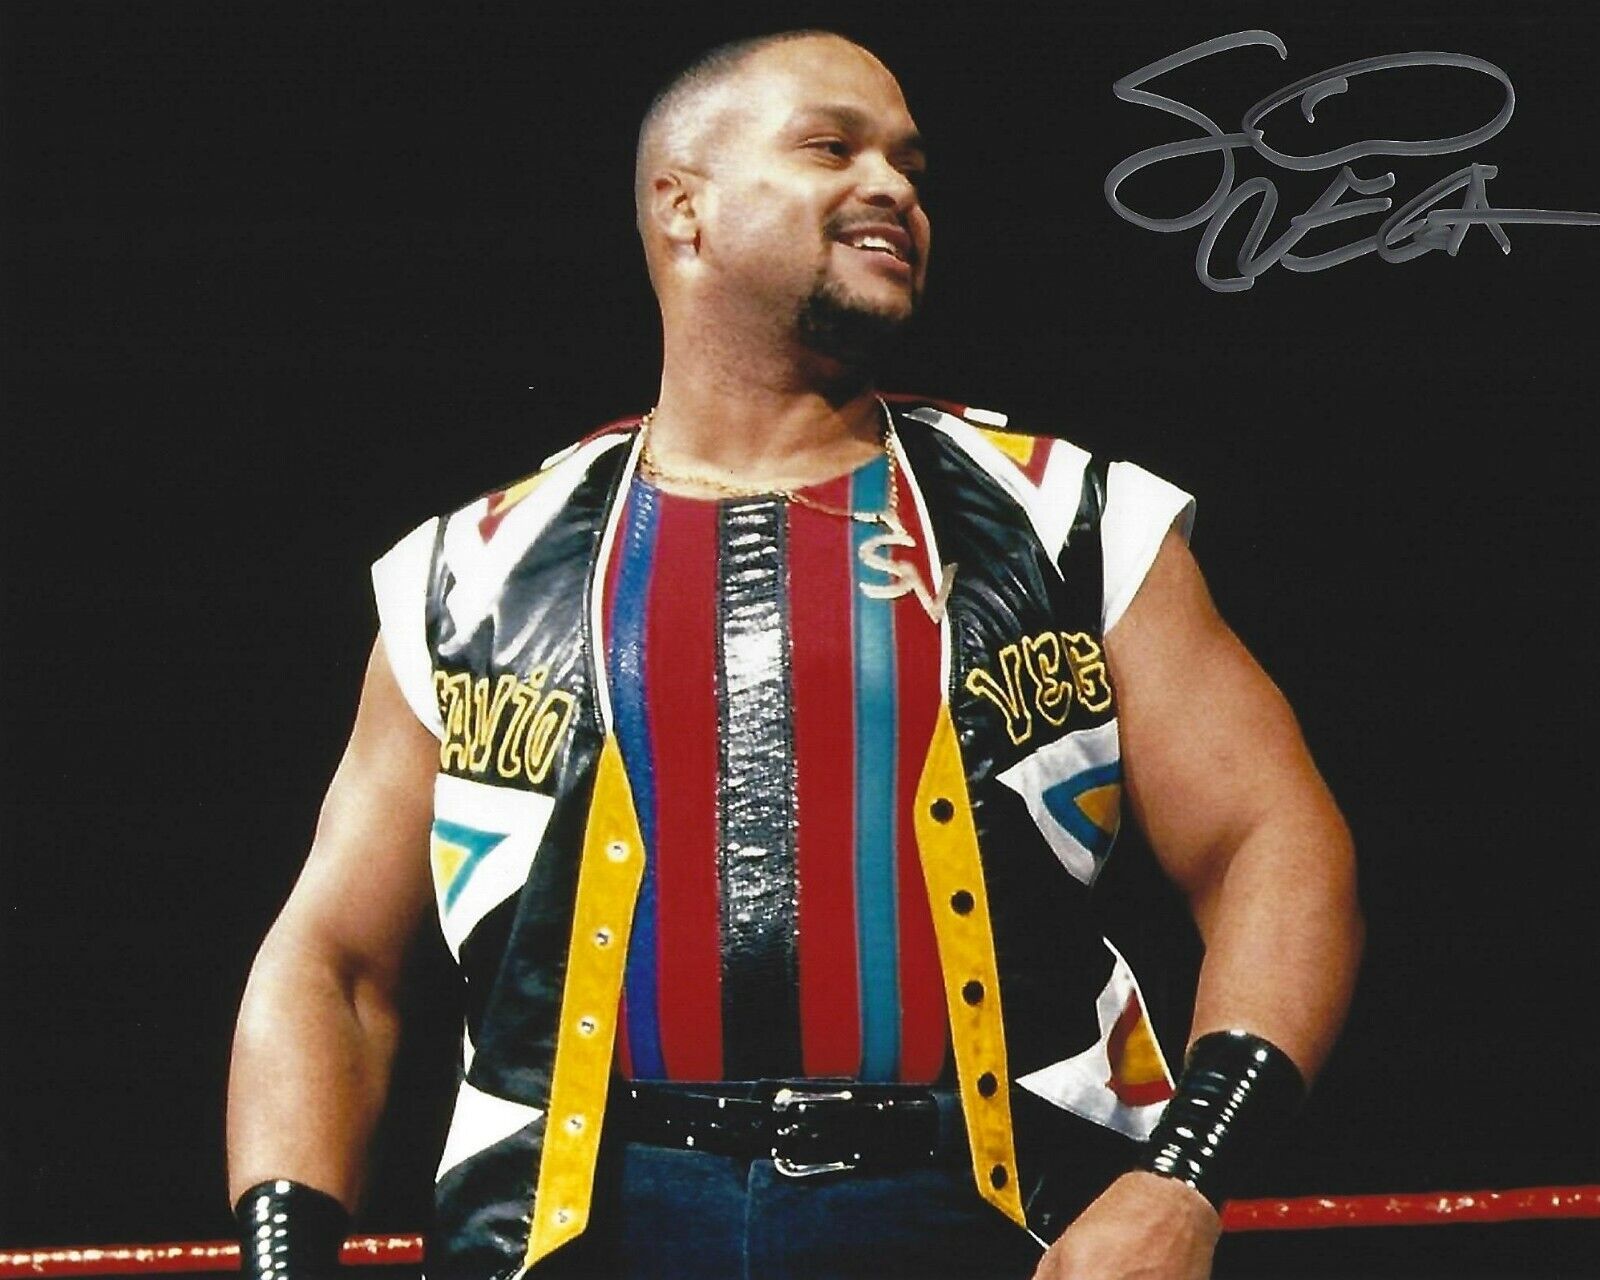 Savio Vega Signed 8x10 Photo Poster painting WWE IWA WWC Los Boricuas Picture Autograph TNA MLW